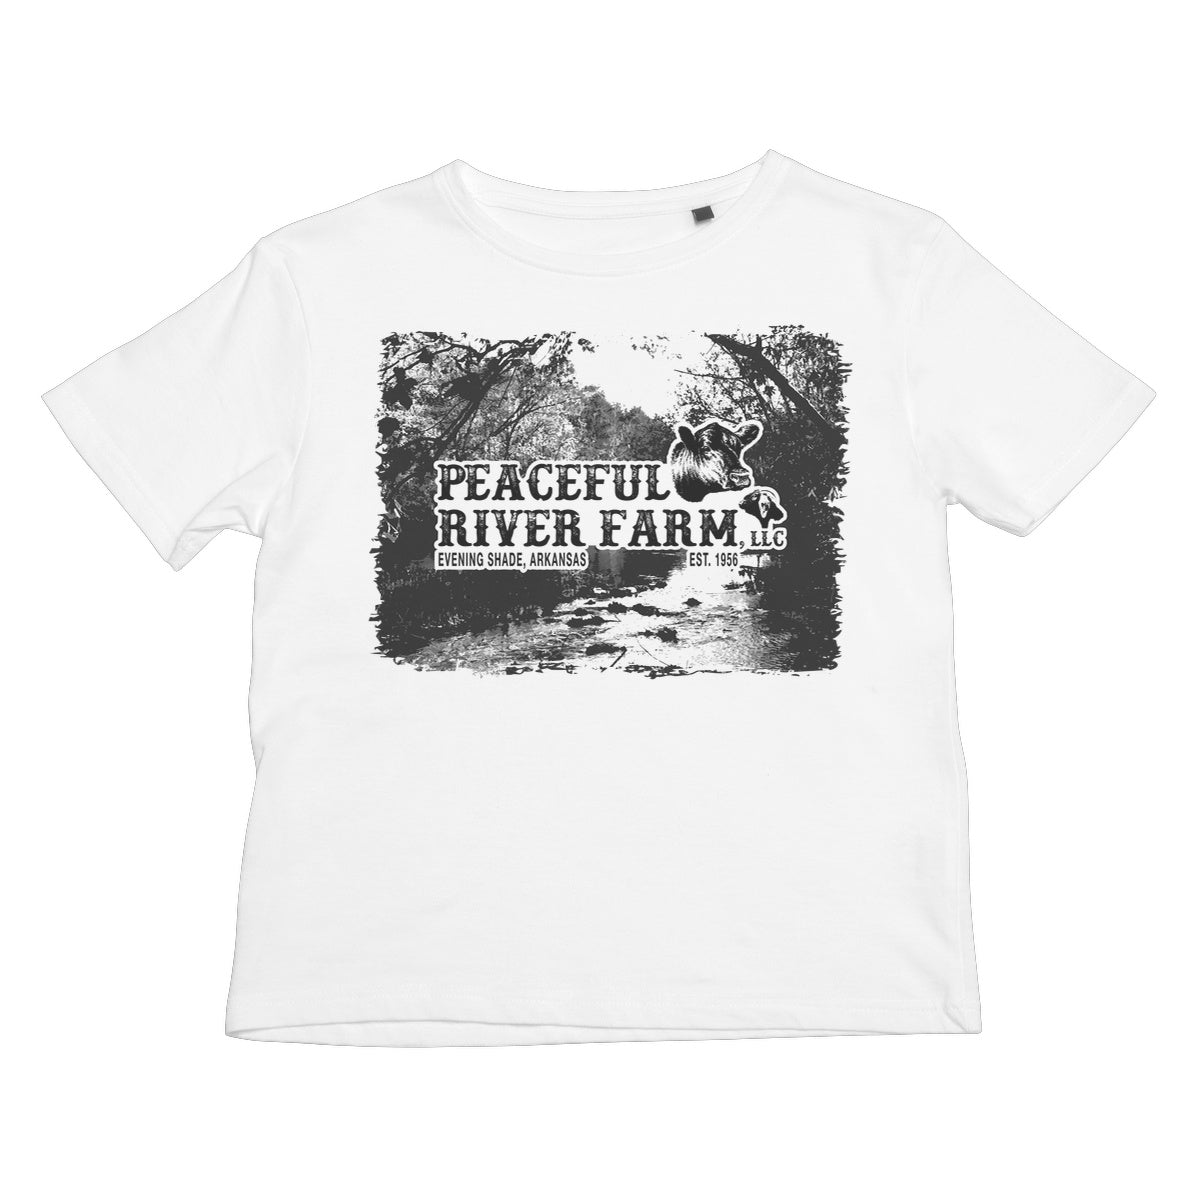 Peaceful River Farm Tee Kids T-Shirt